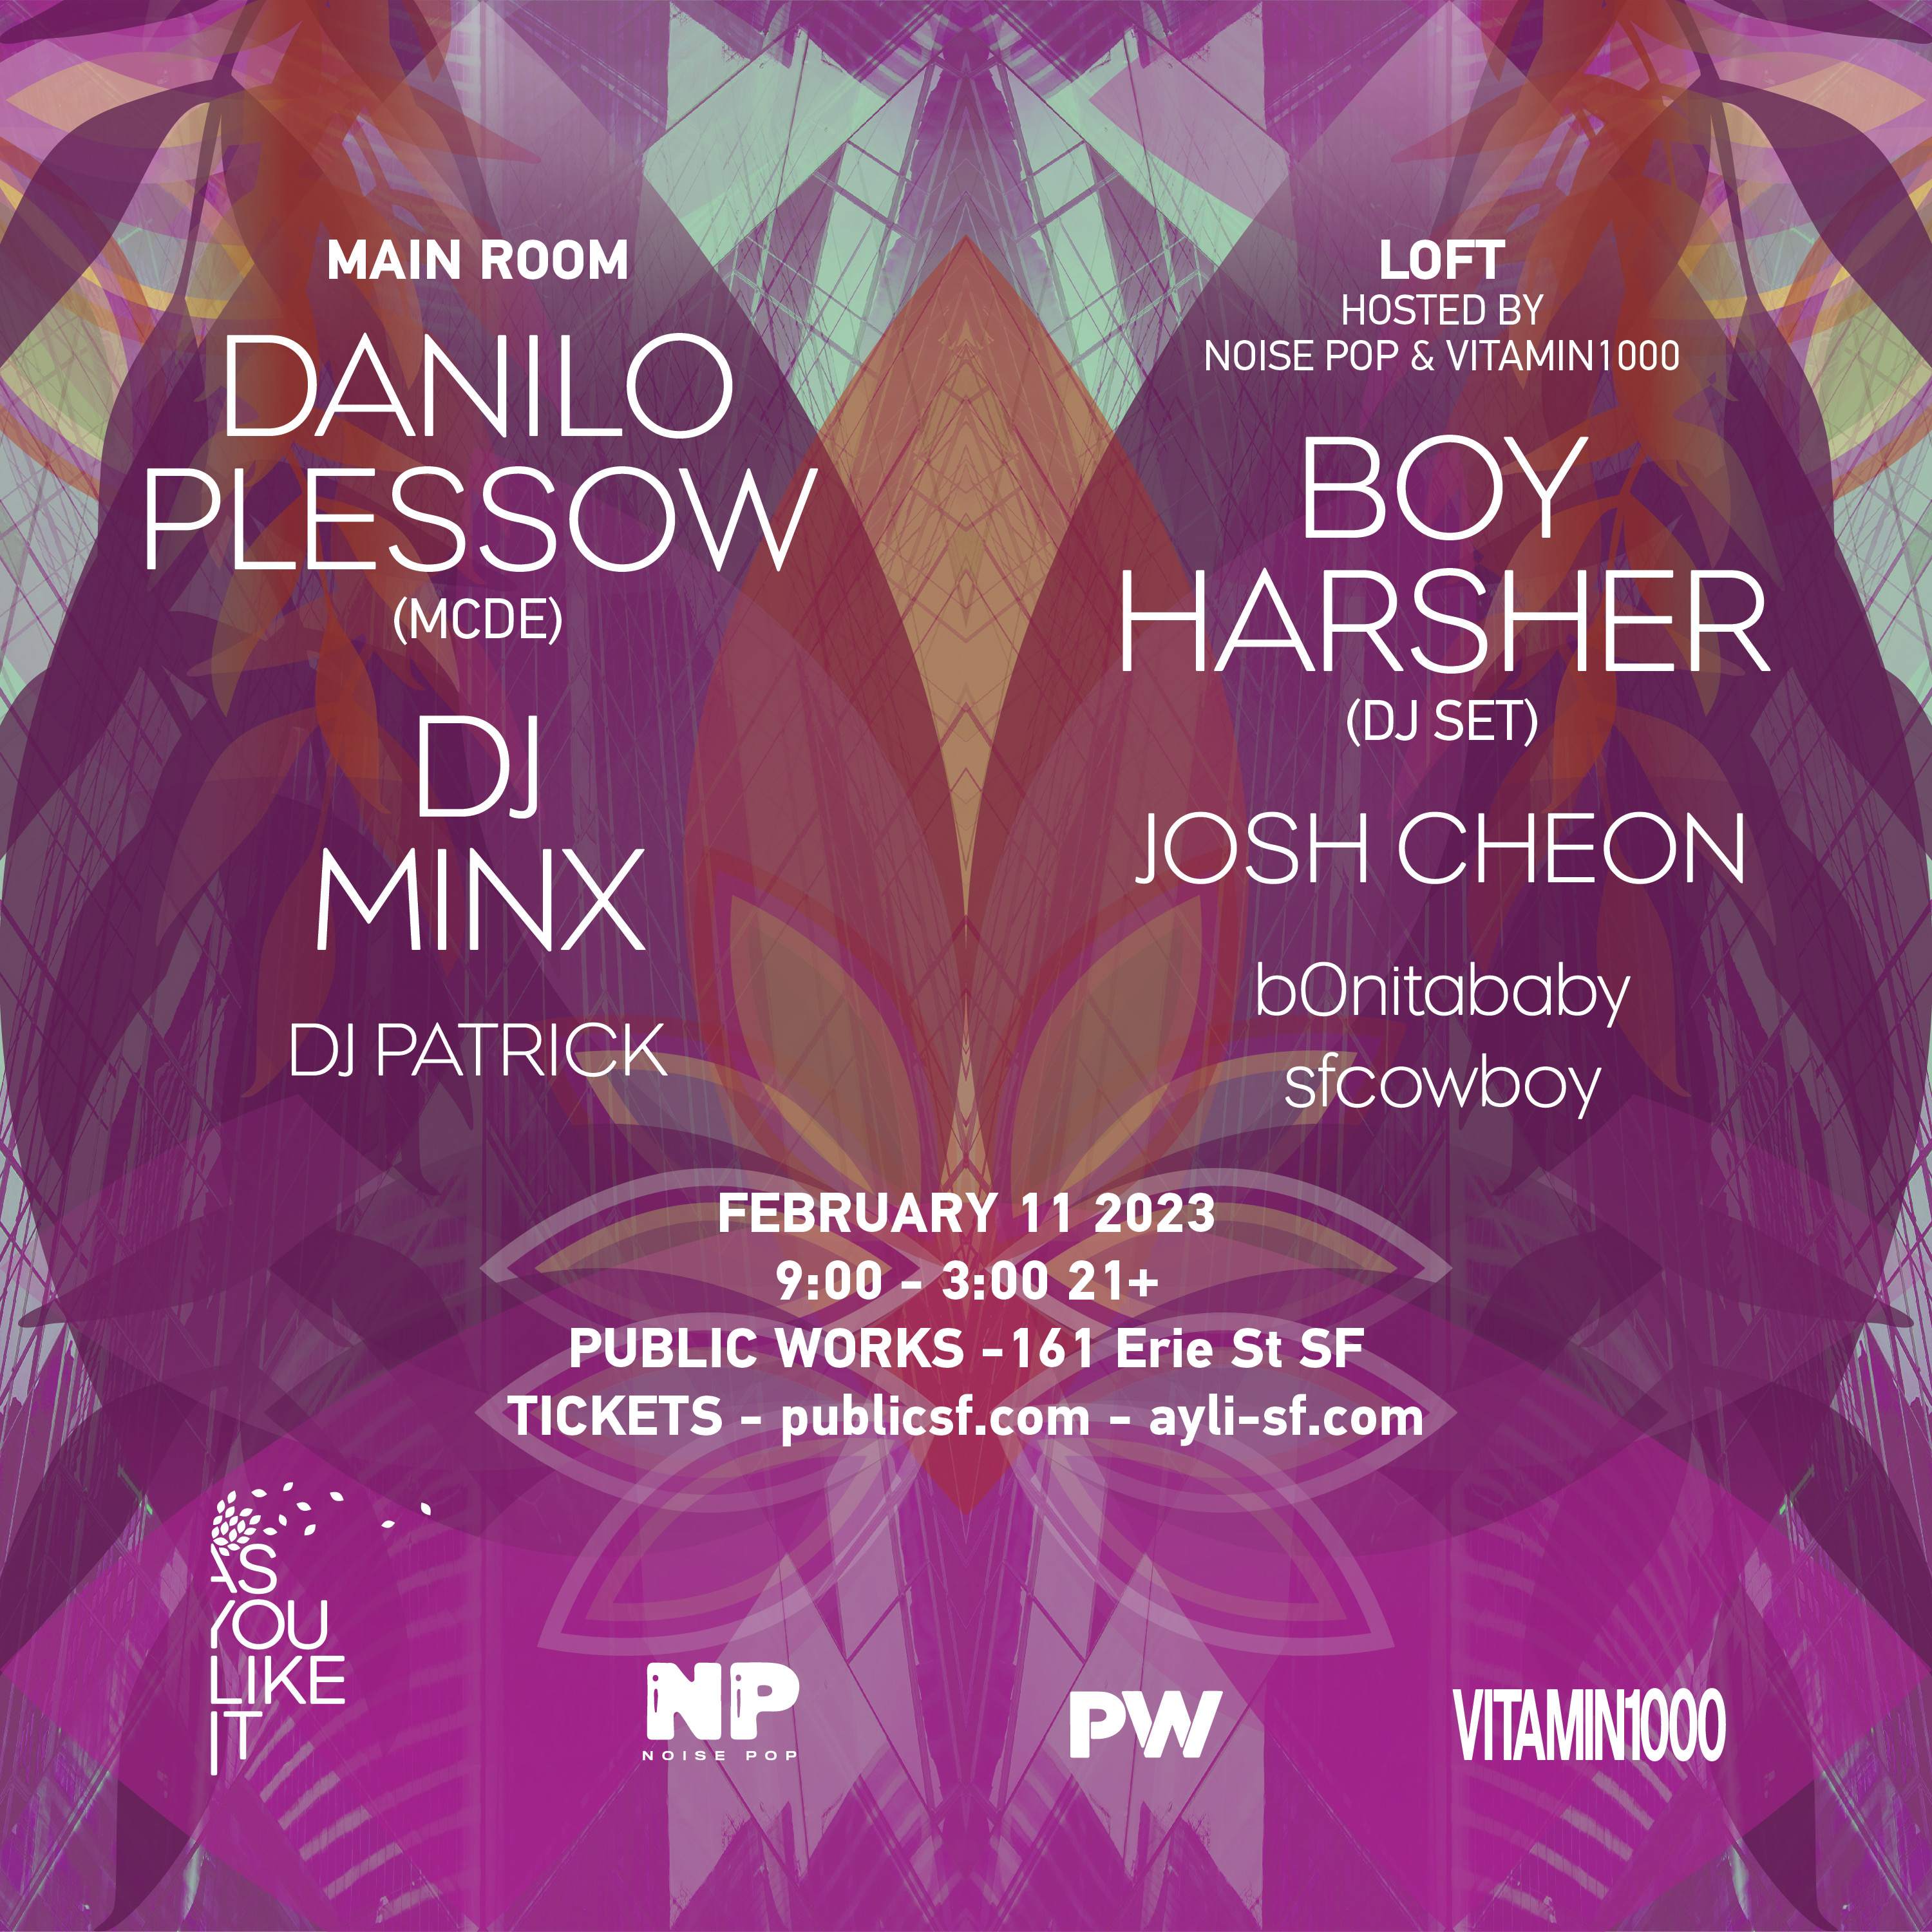 AYLI & PW present Danilo Plessow AKA Motor City Drum Ensemble, DJ Minx, & Boy Harsher (DJ Set) - フライヤー表